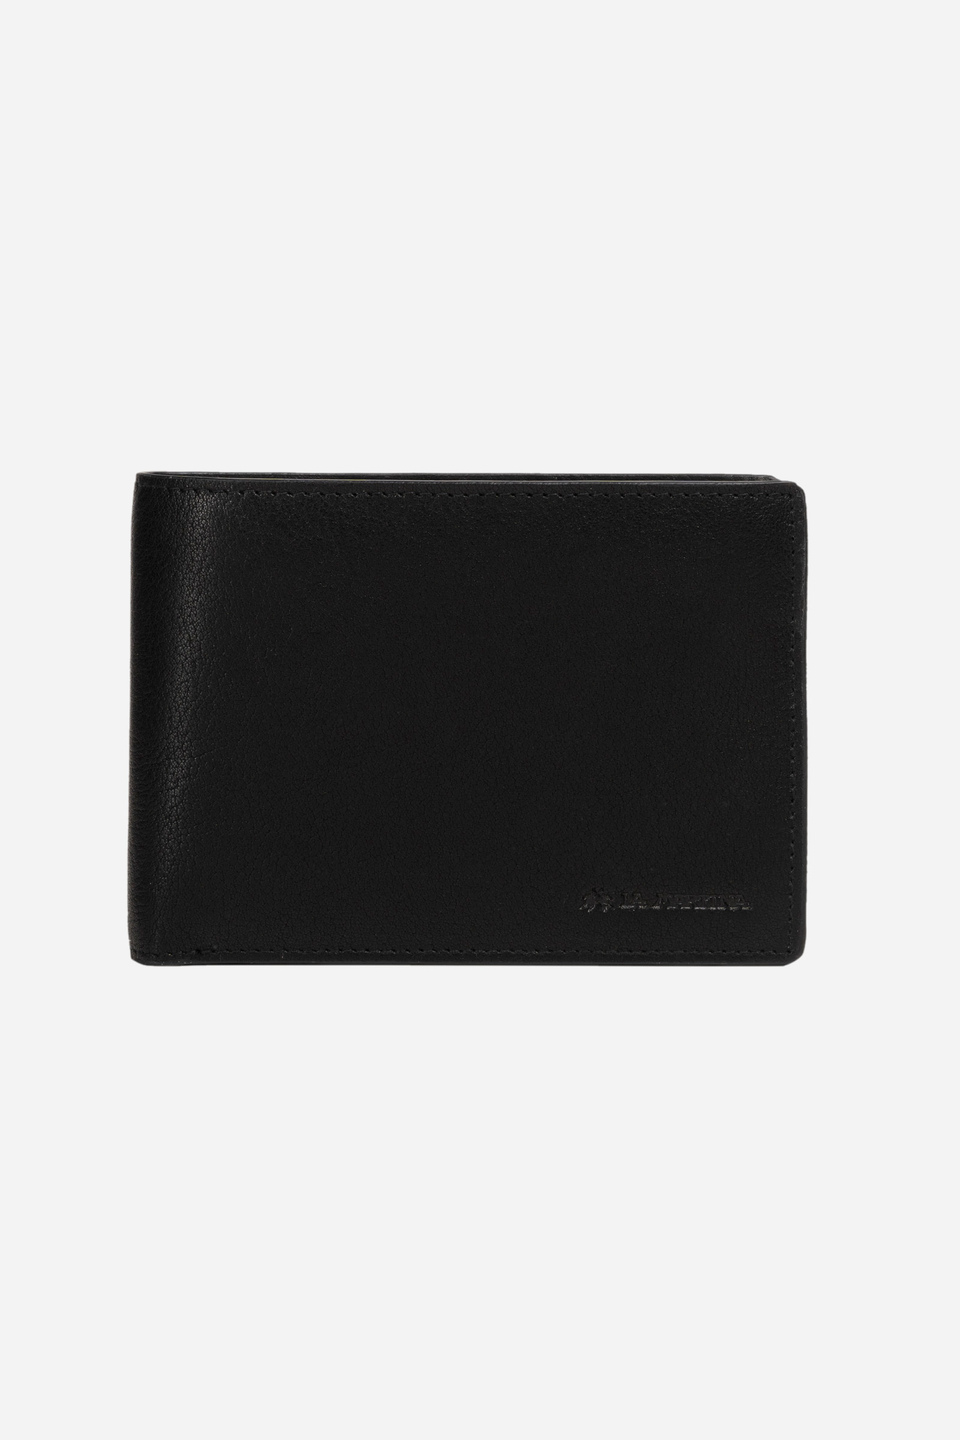 Leather wallet - Paulo | La Martina - Official Online Shop